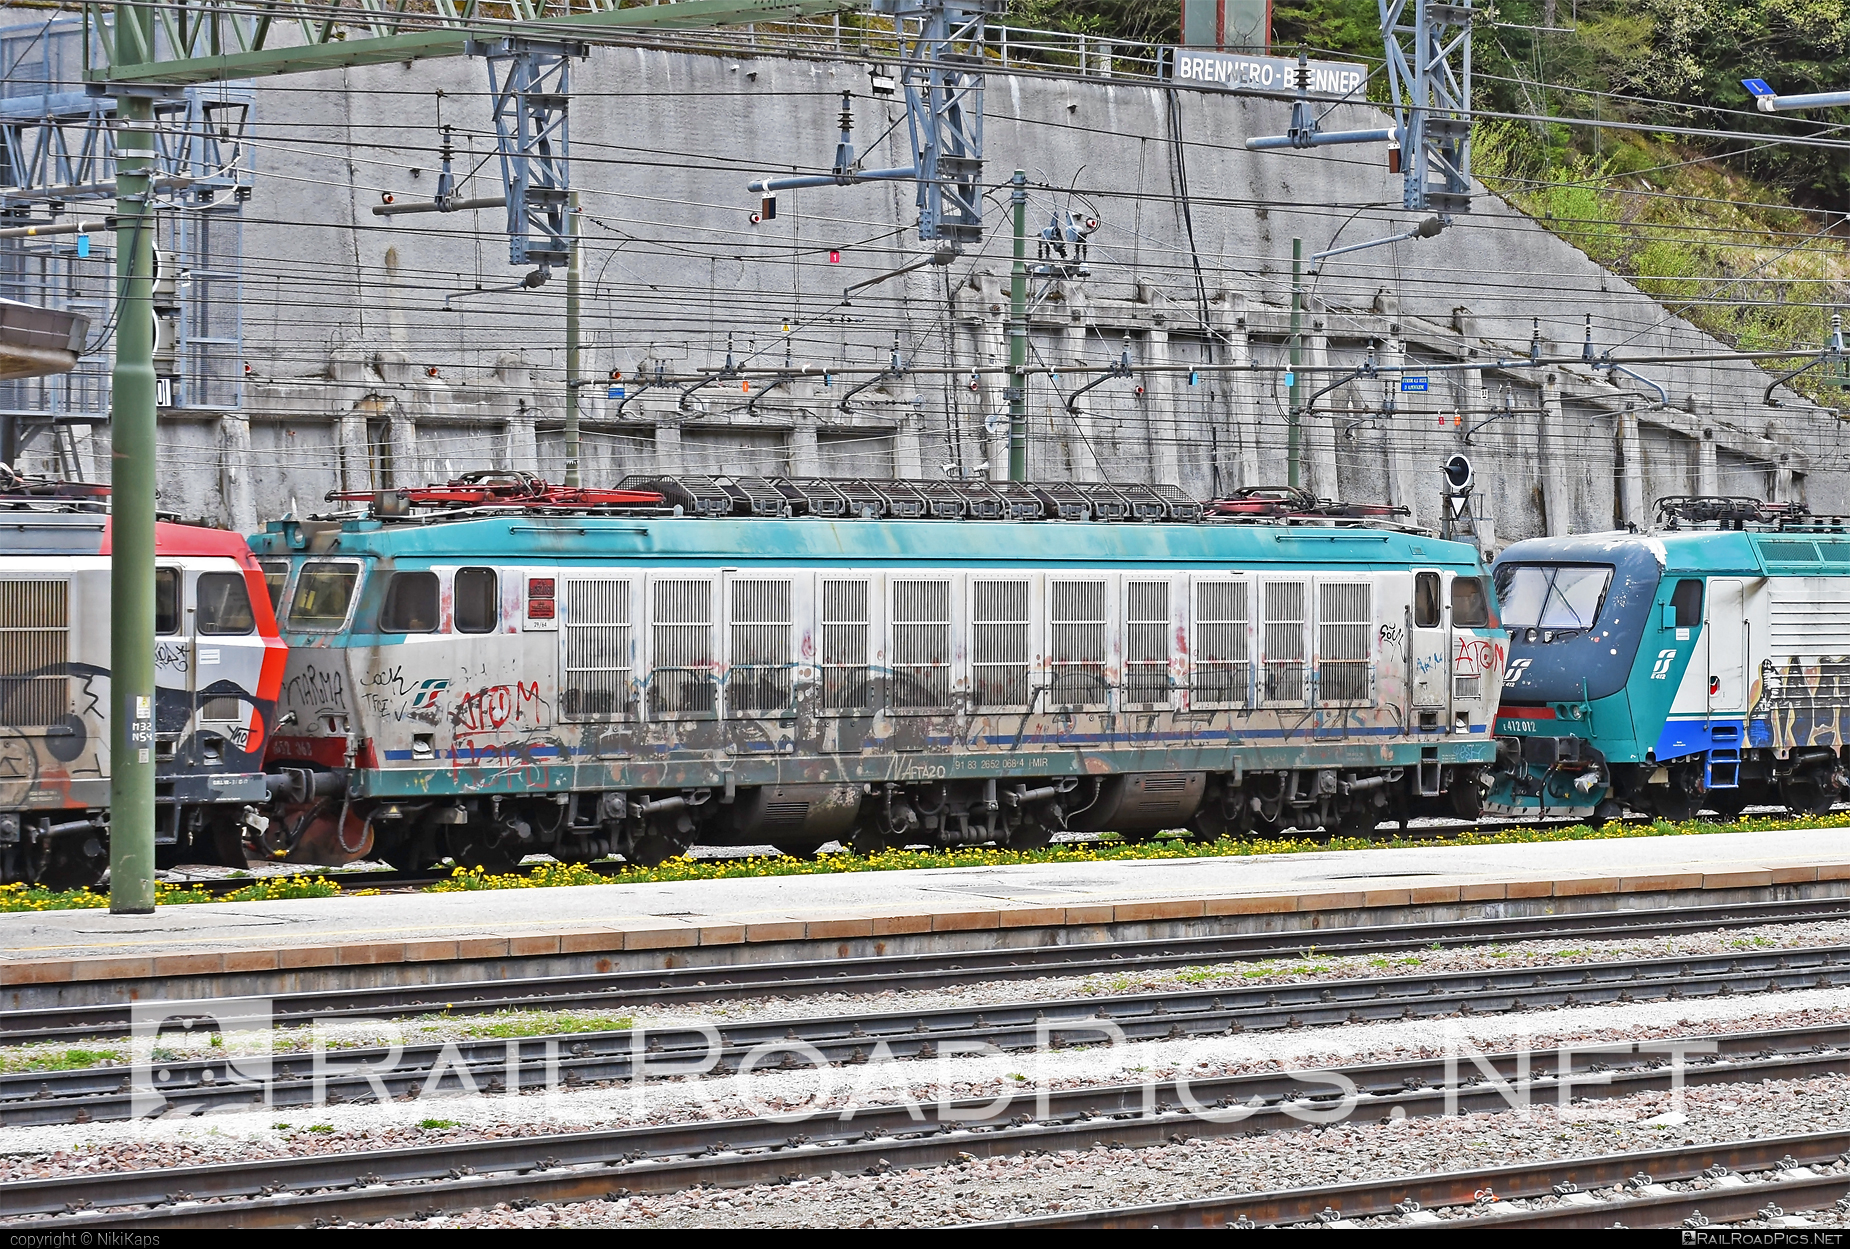 FS Class E.652 - E652 068 operated by Mercitalia Rail S.r.l. #e652 #ferroviedellostato #fs #fsClassE652 #fsitaliane #graffiti #mercitalia #tigre